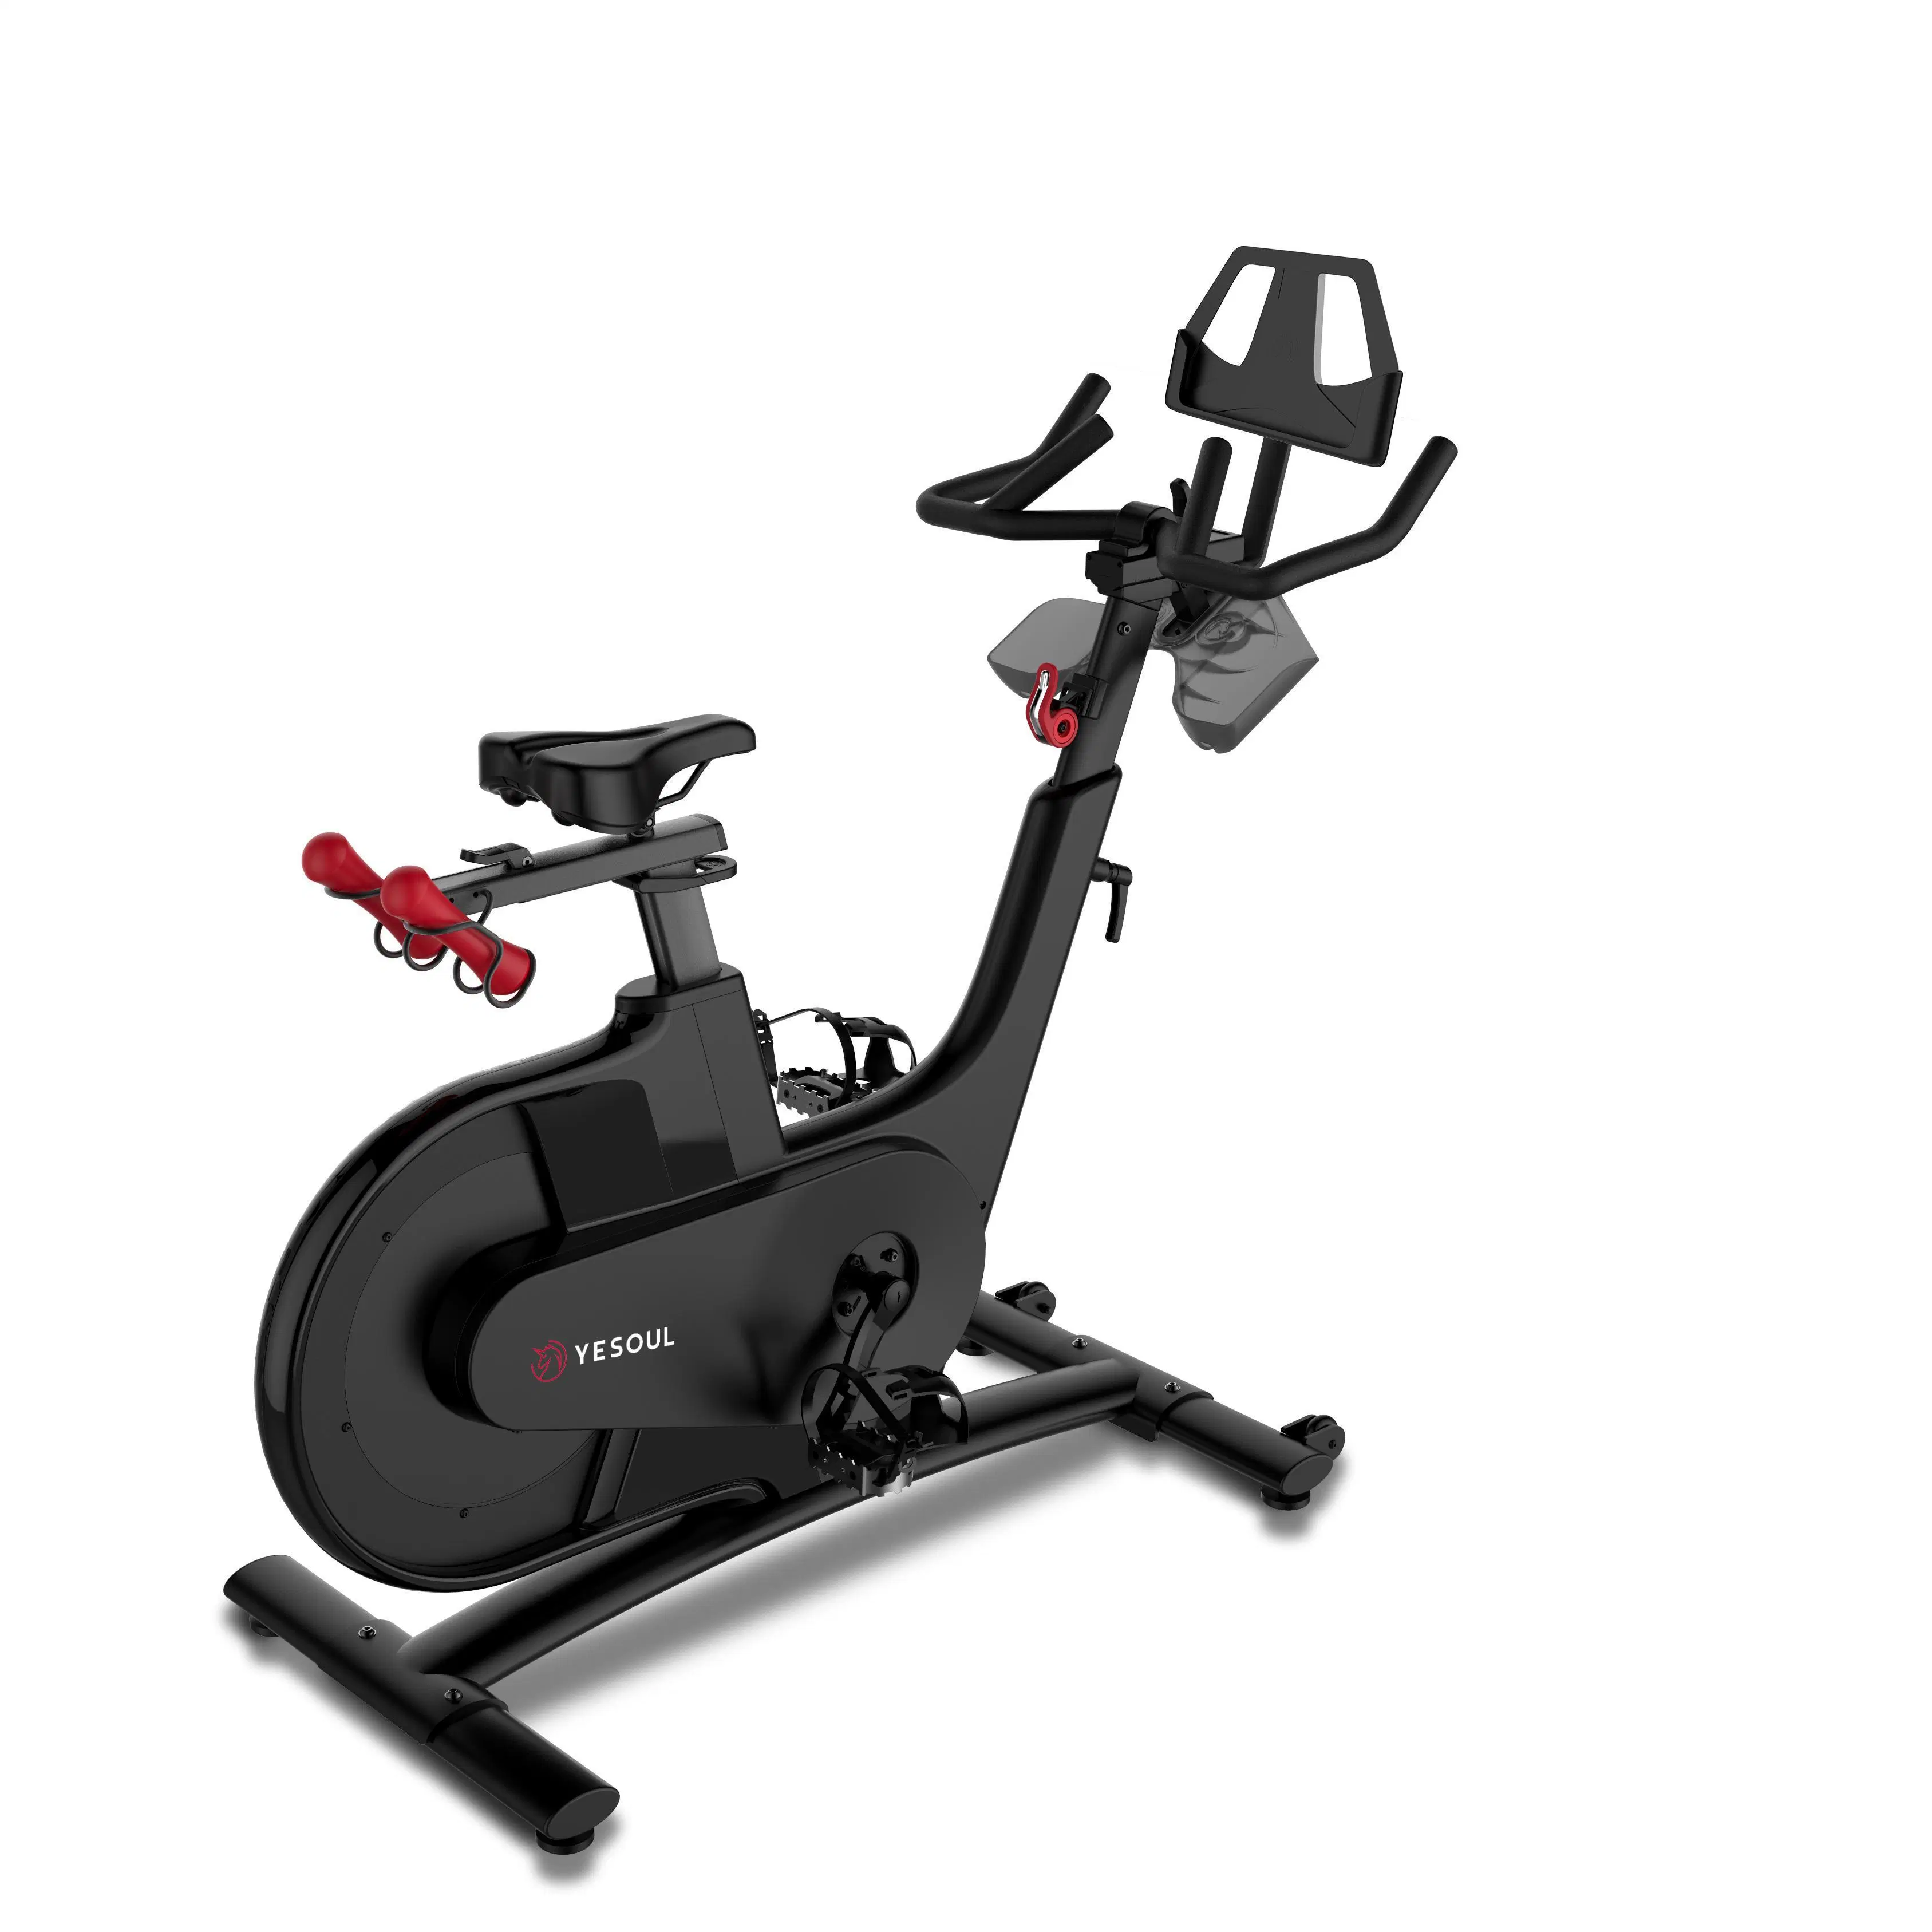 Yesoul Gym Spinning Bike Sturdy Cardio Fitness Training Equipment